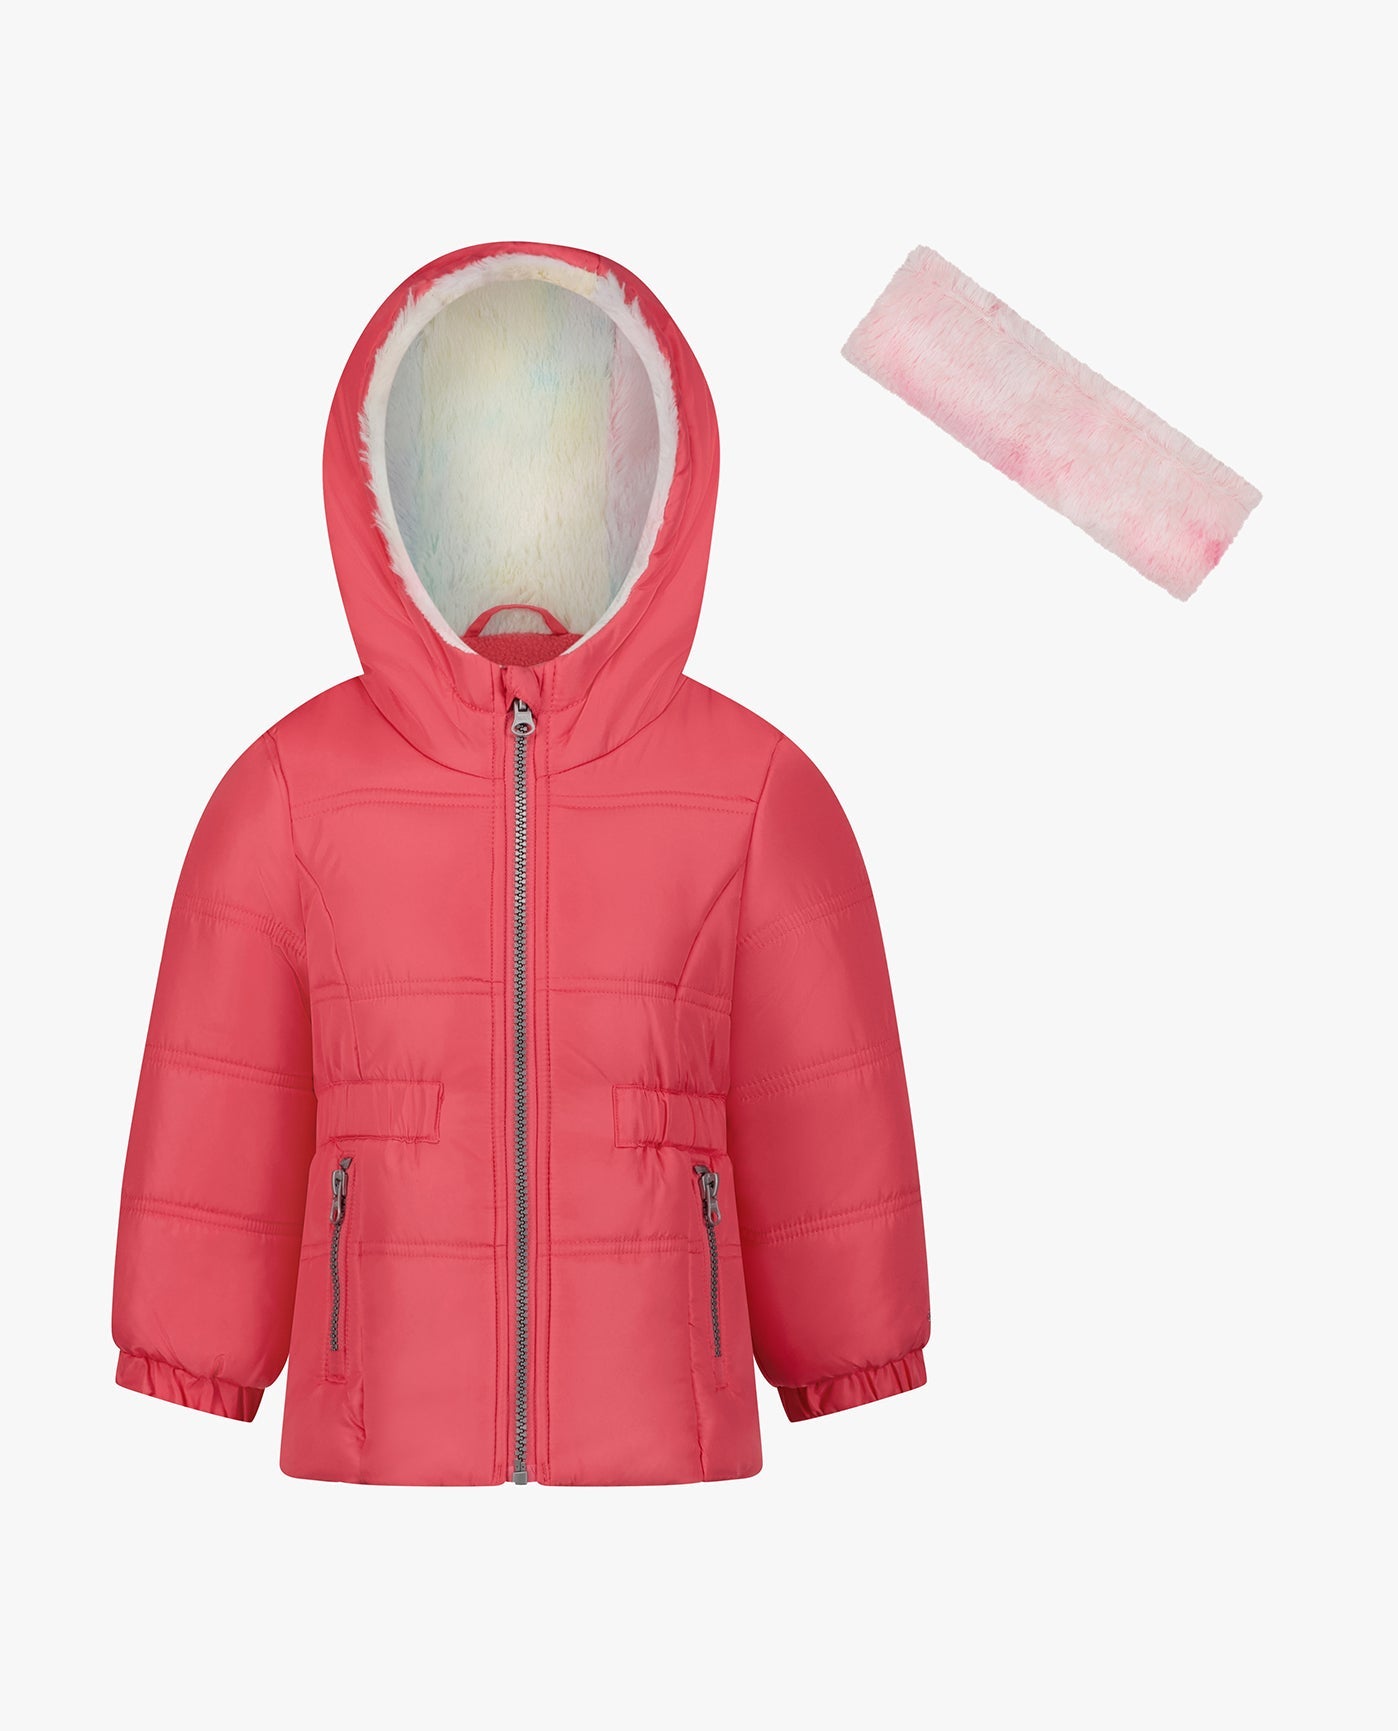 Buy Mallimoda Kids Boys Girls Hooded Denim Jacket Zipper Coat Outerwear  Style 2 Blue 11-12 Years at Amazon.in